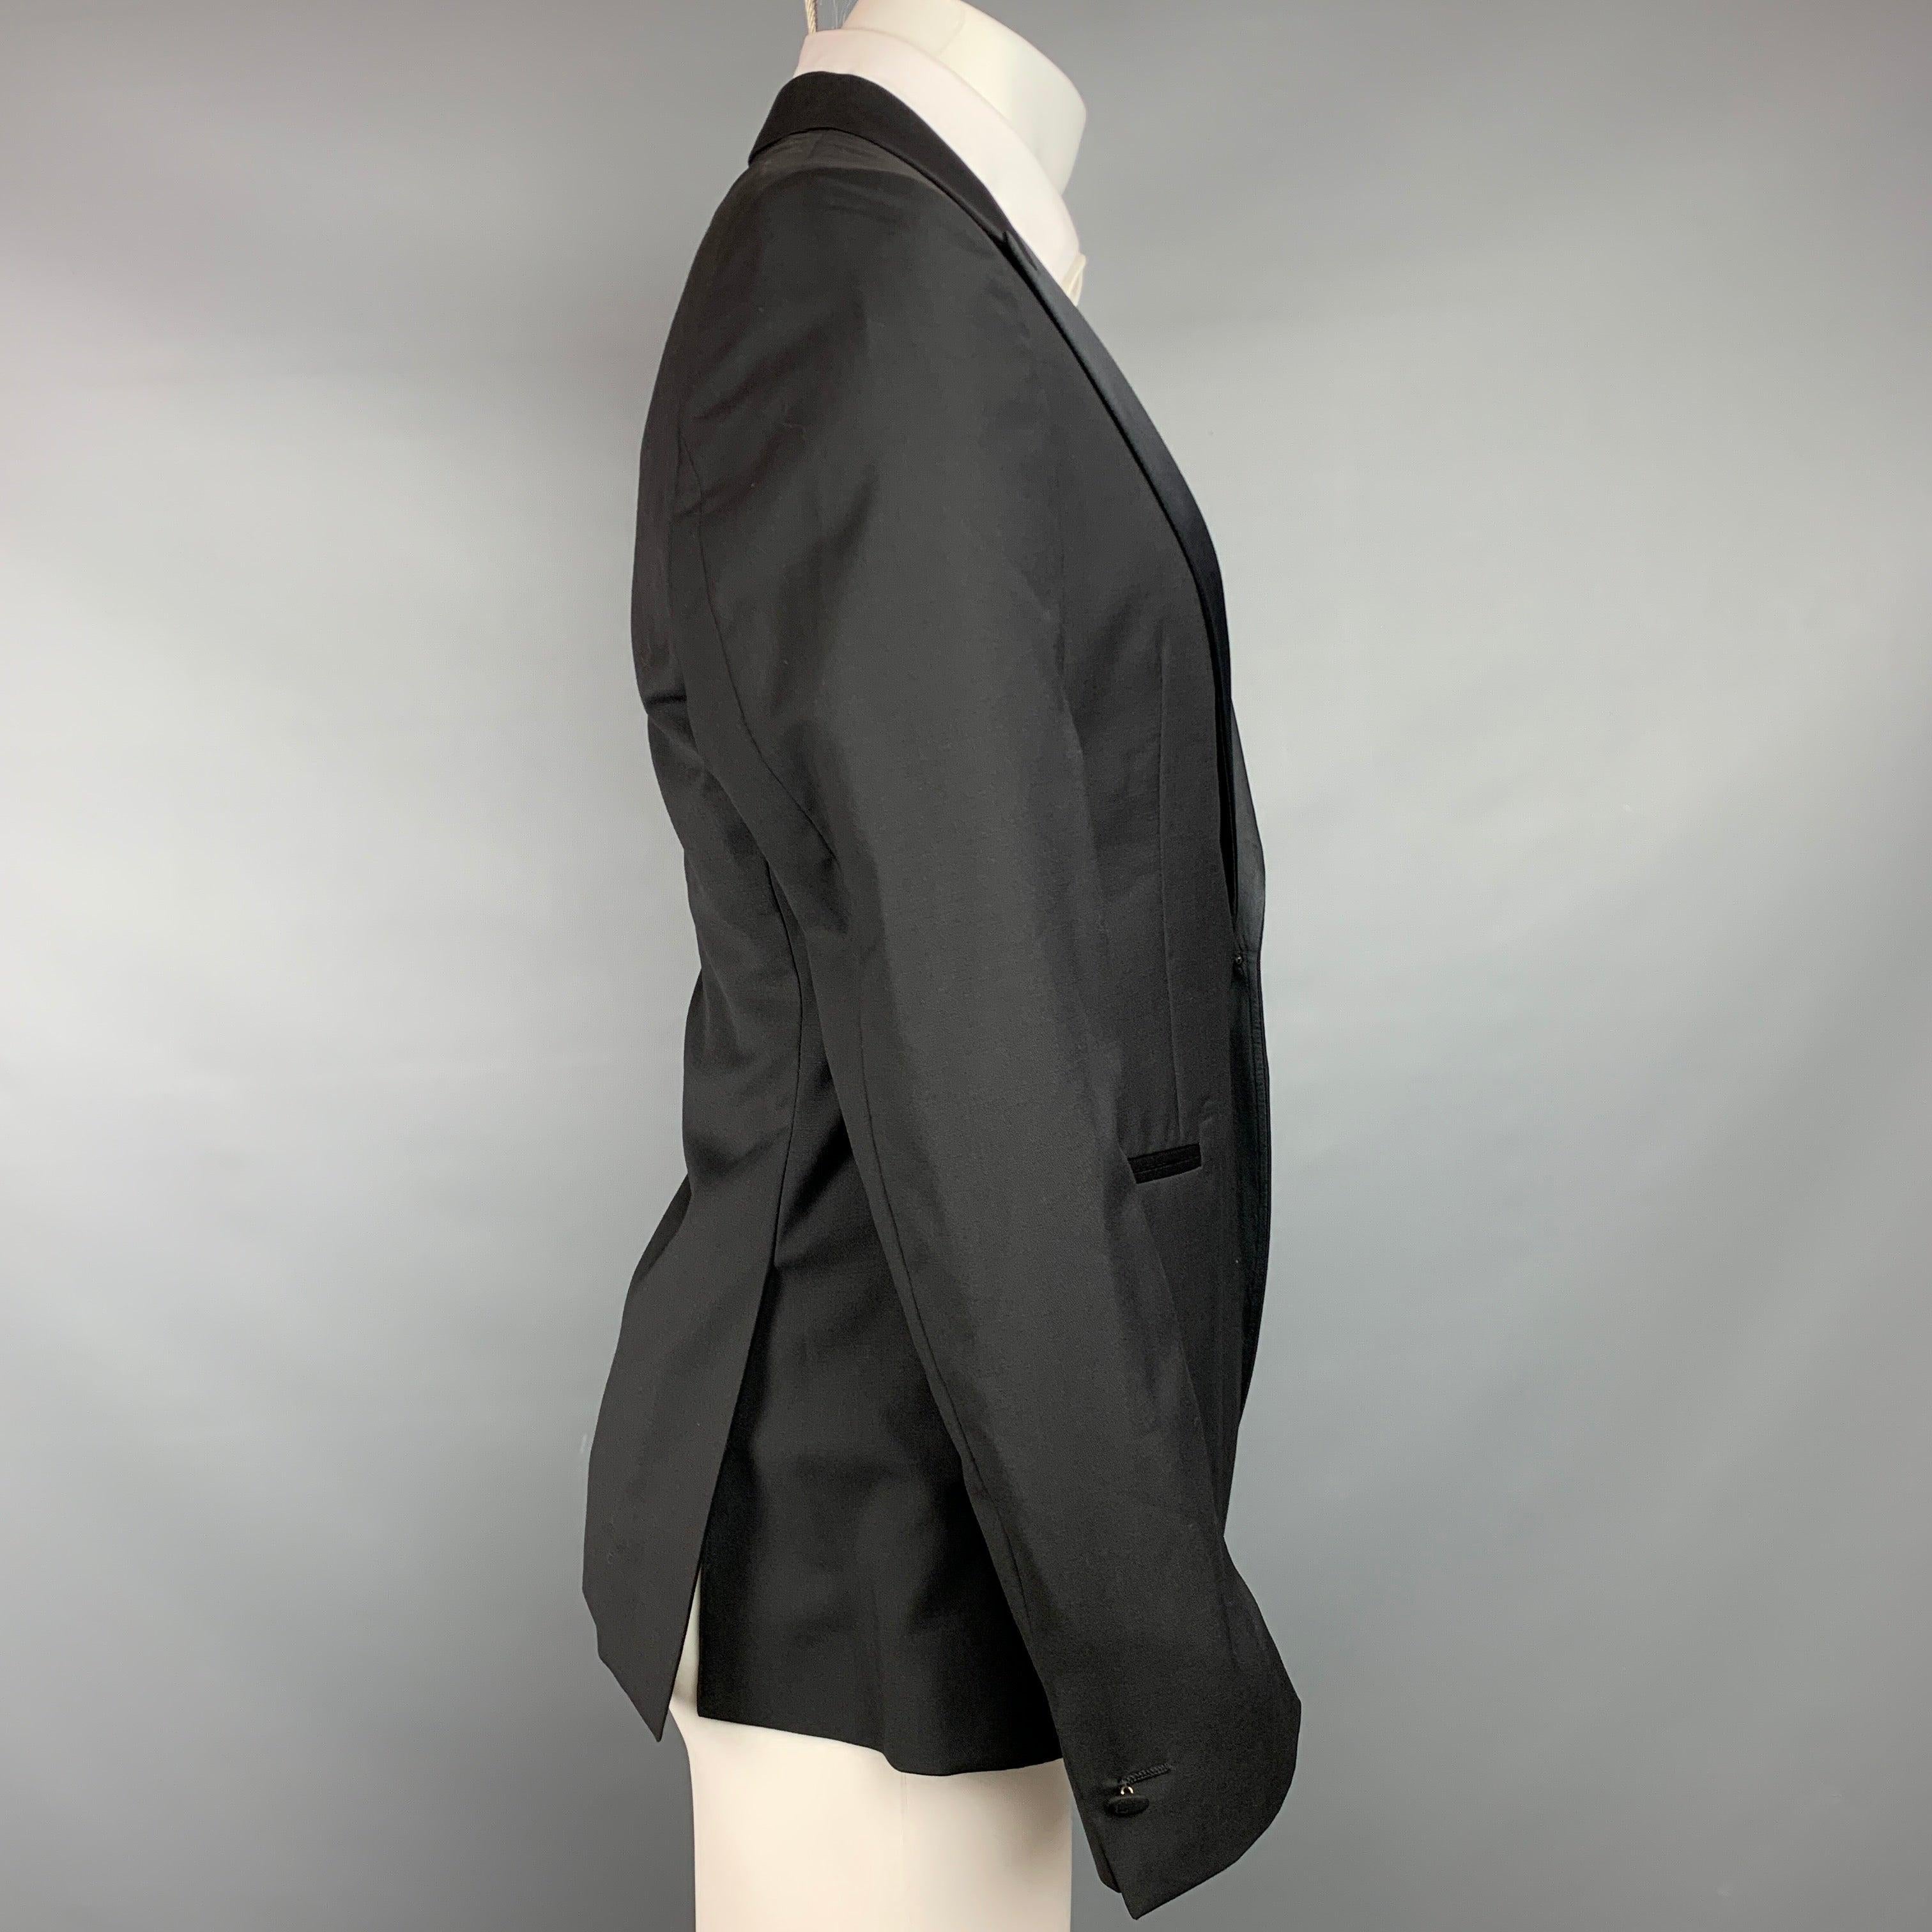 JOHN VARVATOS Size 38 Regular Black Wool / Mohair Peak Lapel Sport Coat In Good Condition For Sale In San Francisco, CA